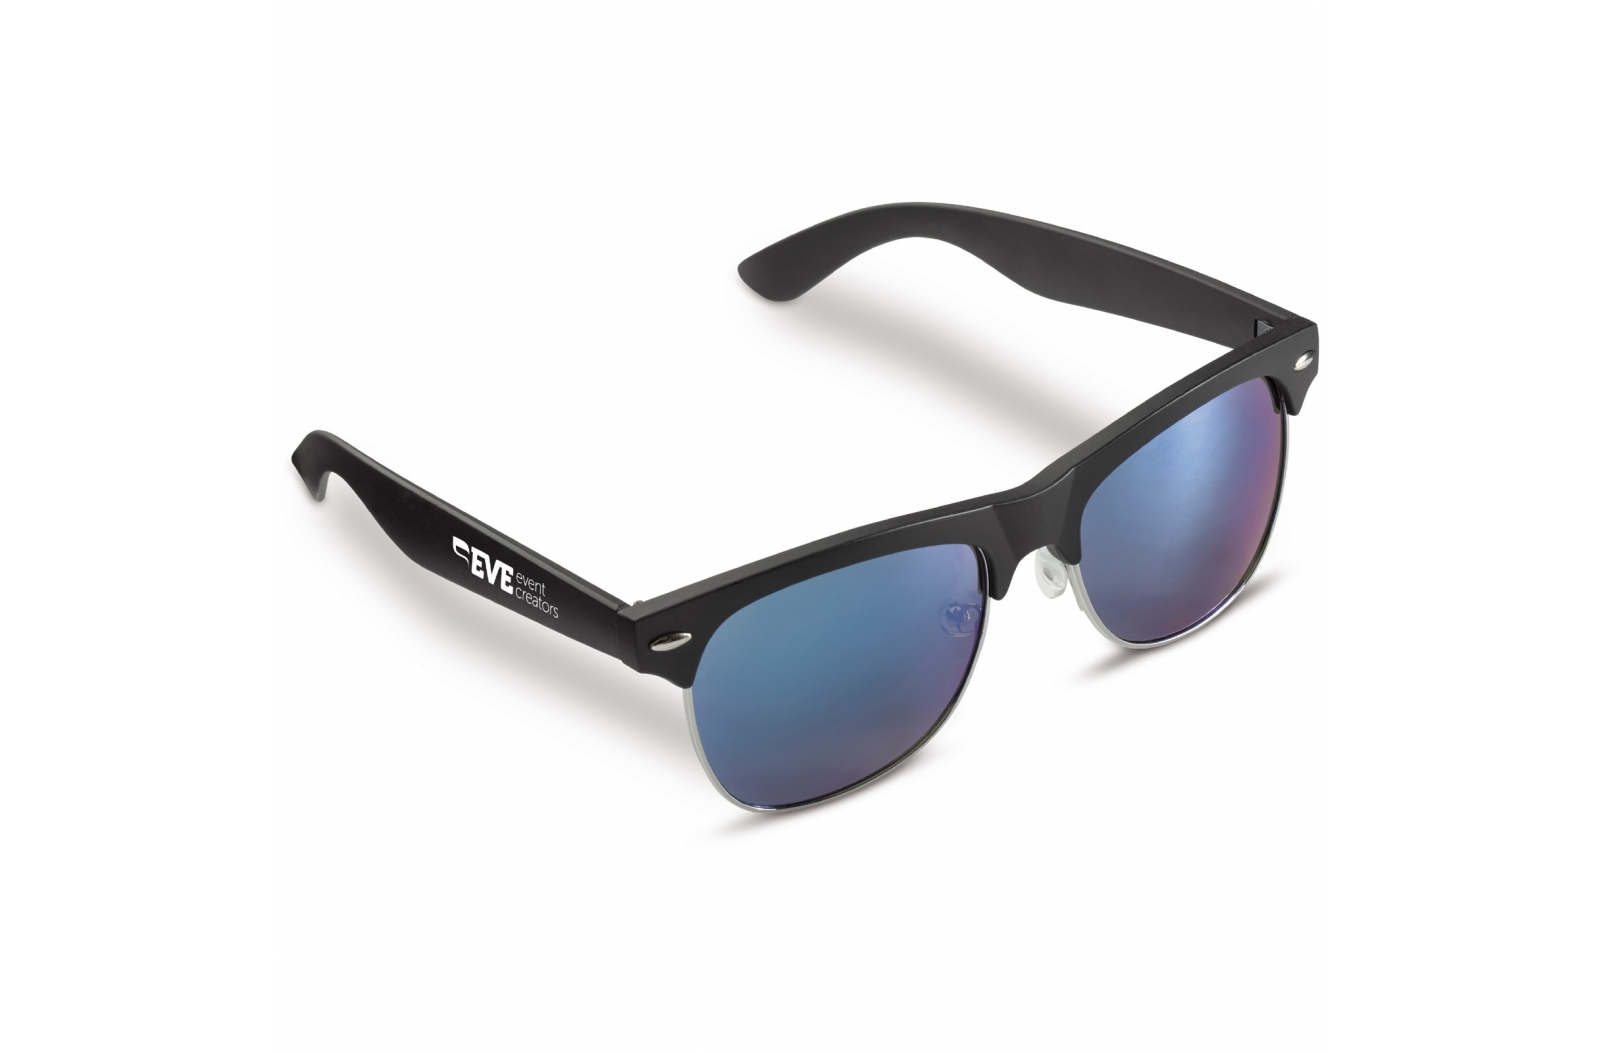 Sonnenbrille Marty UV400